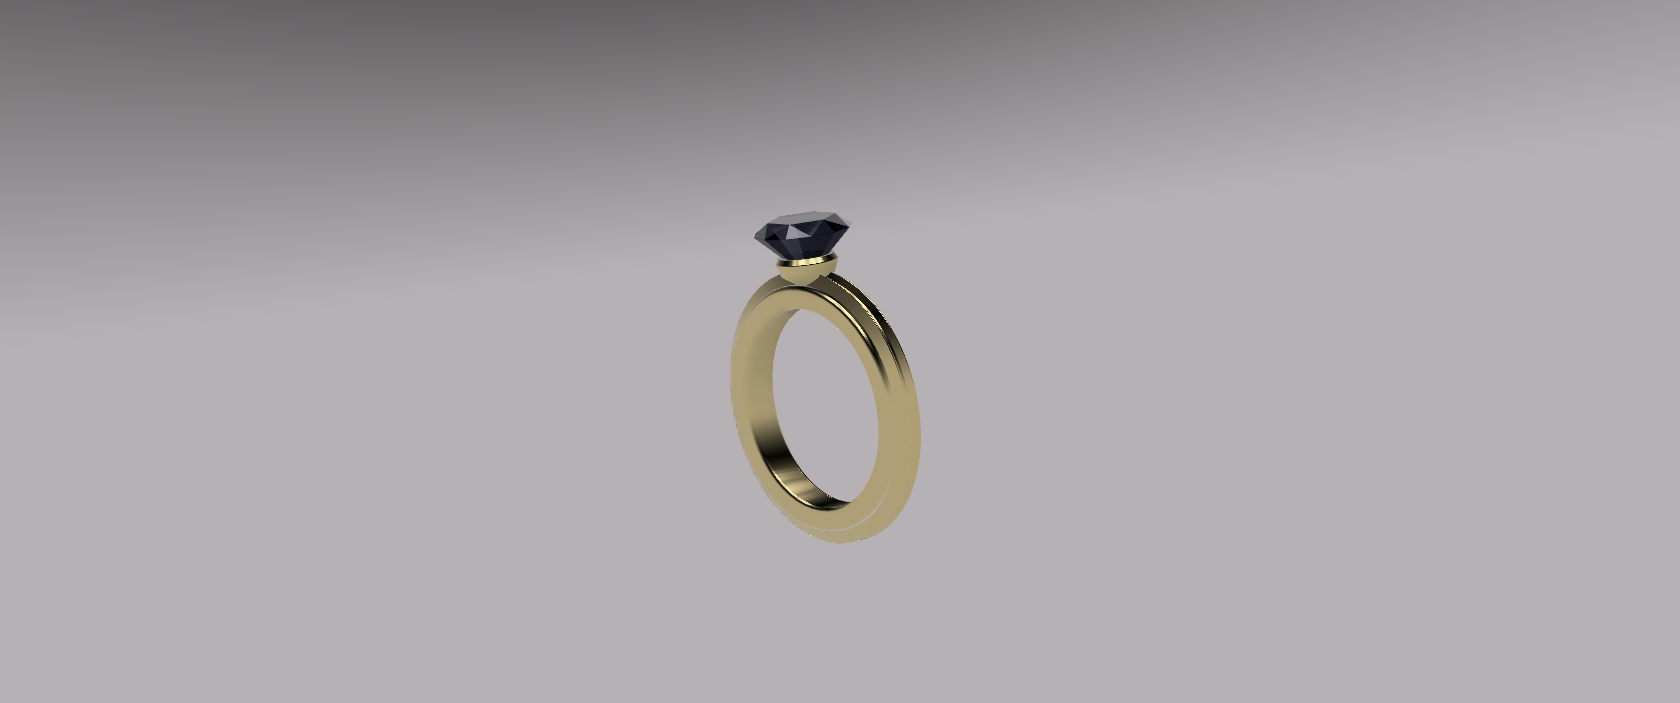 Diamond ring fashion accessory